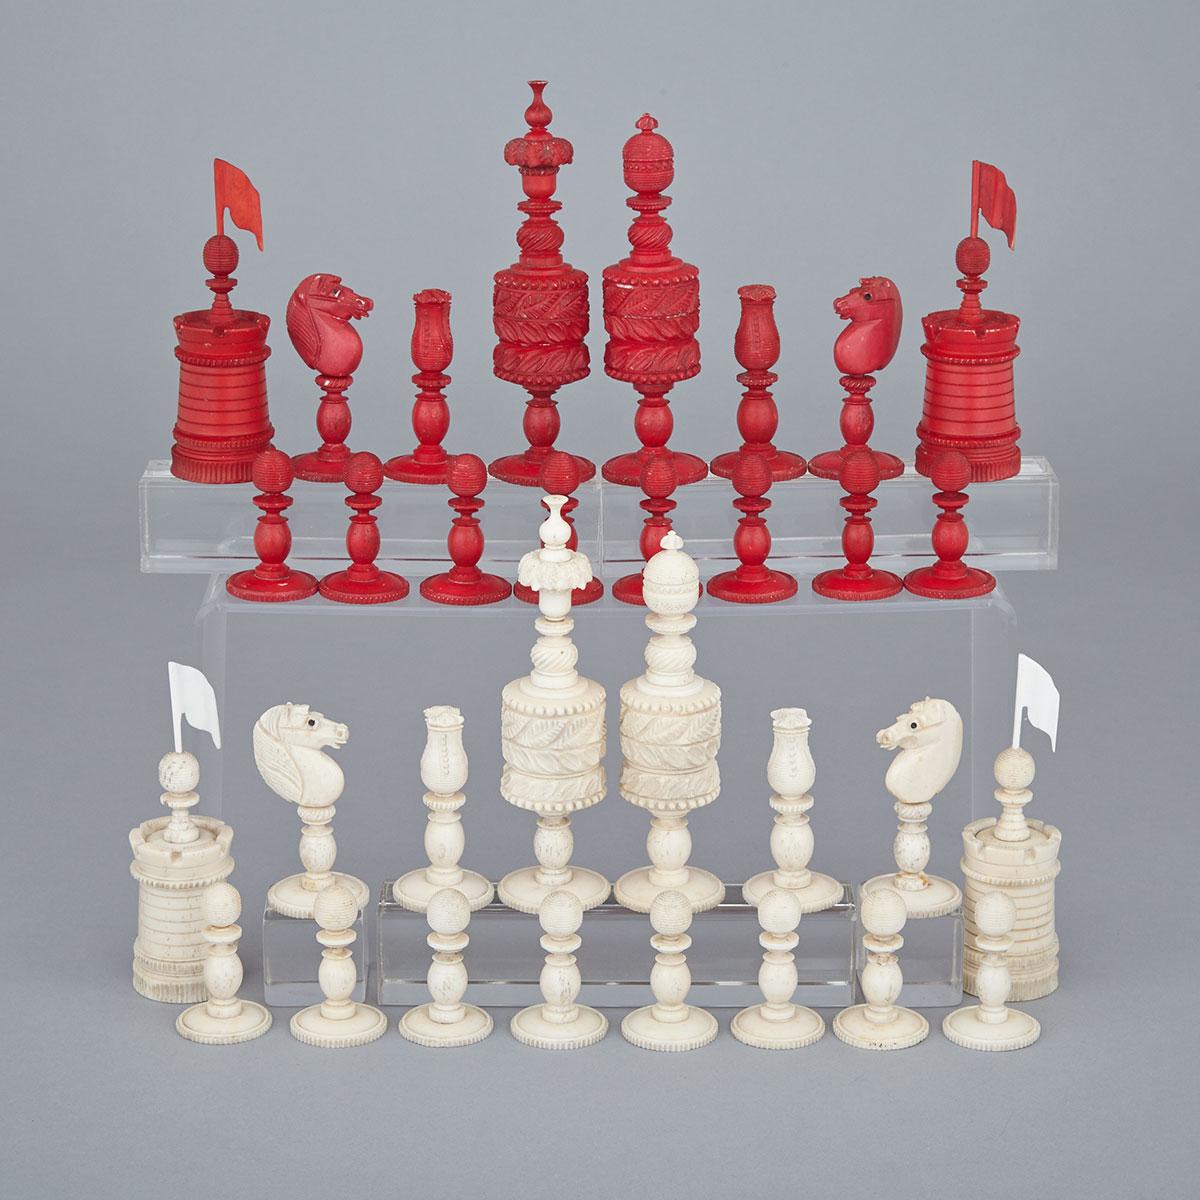 English Turned and Carved Bone ‘Barleycorn’ Pattern Chess Set, mid 19th century